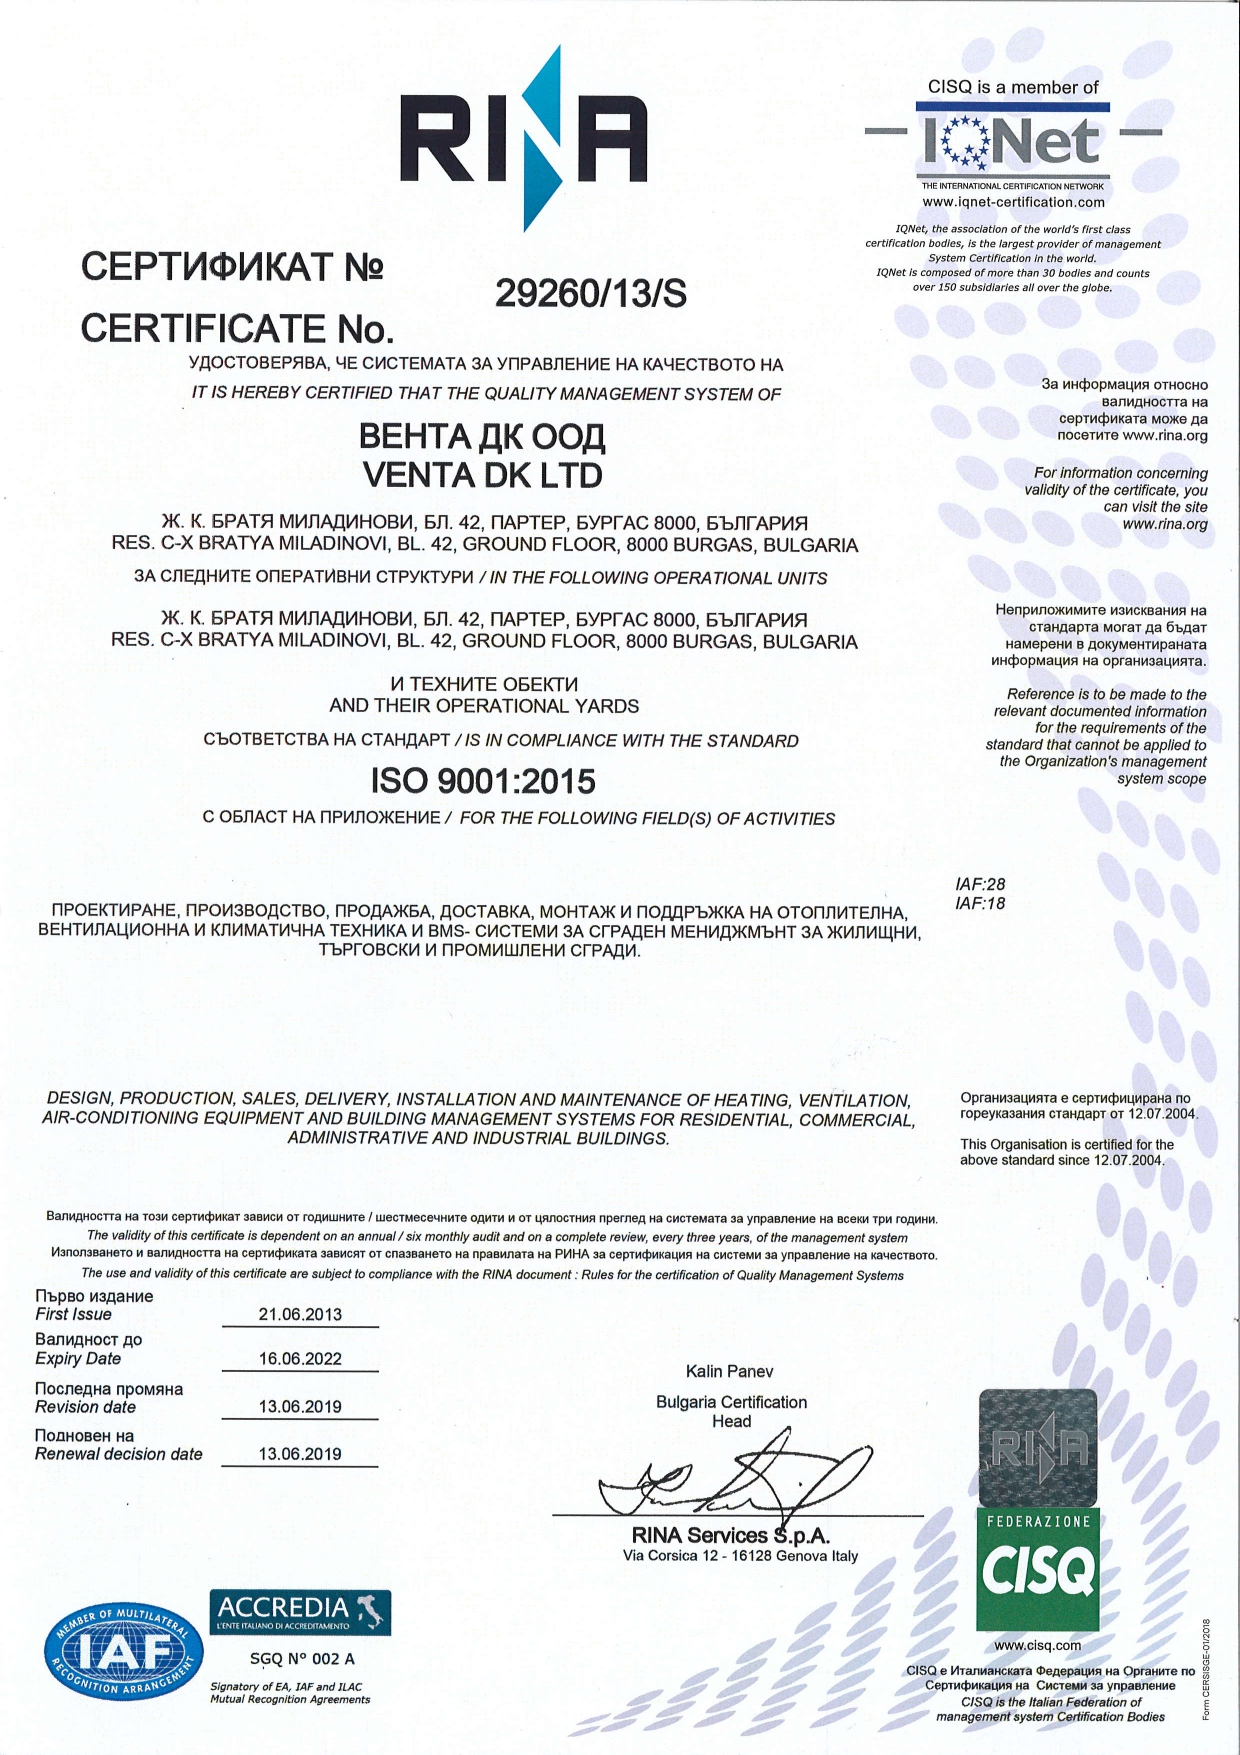 393-sertifikat-isopage-0001.jpg